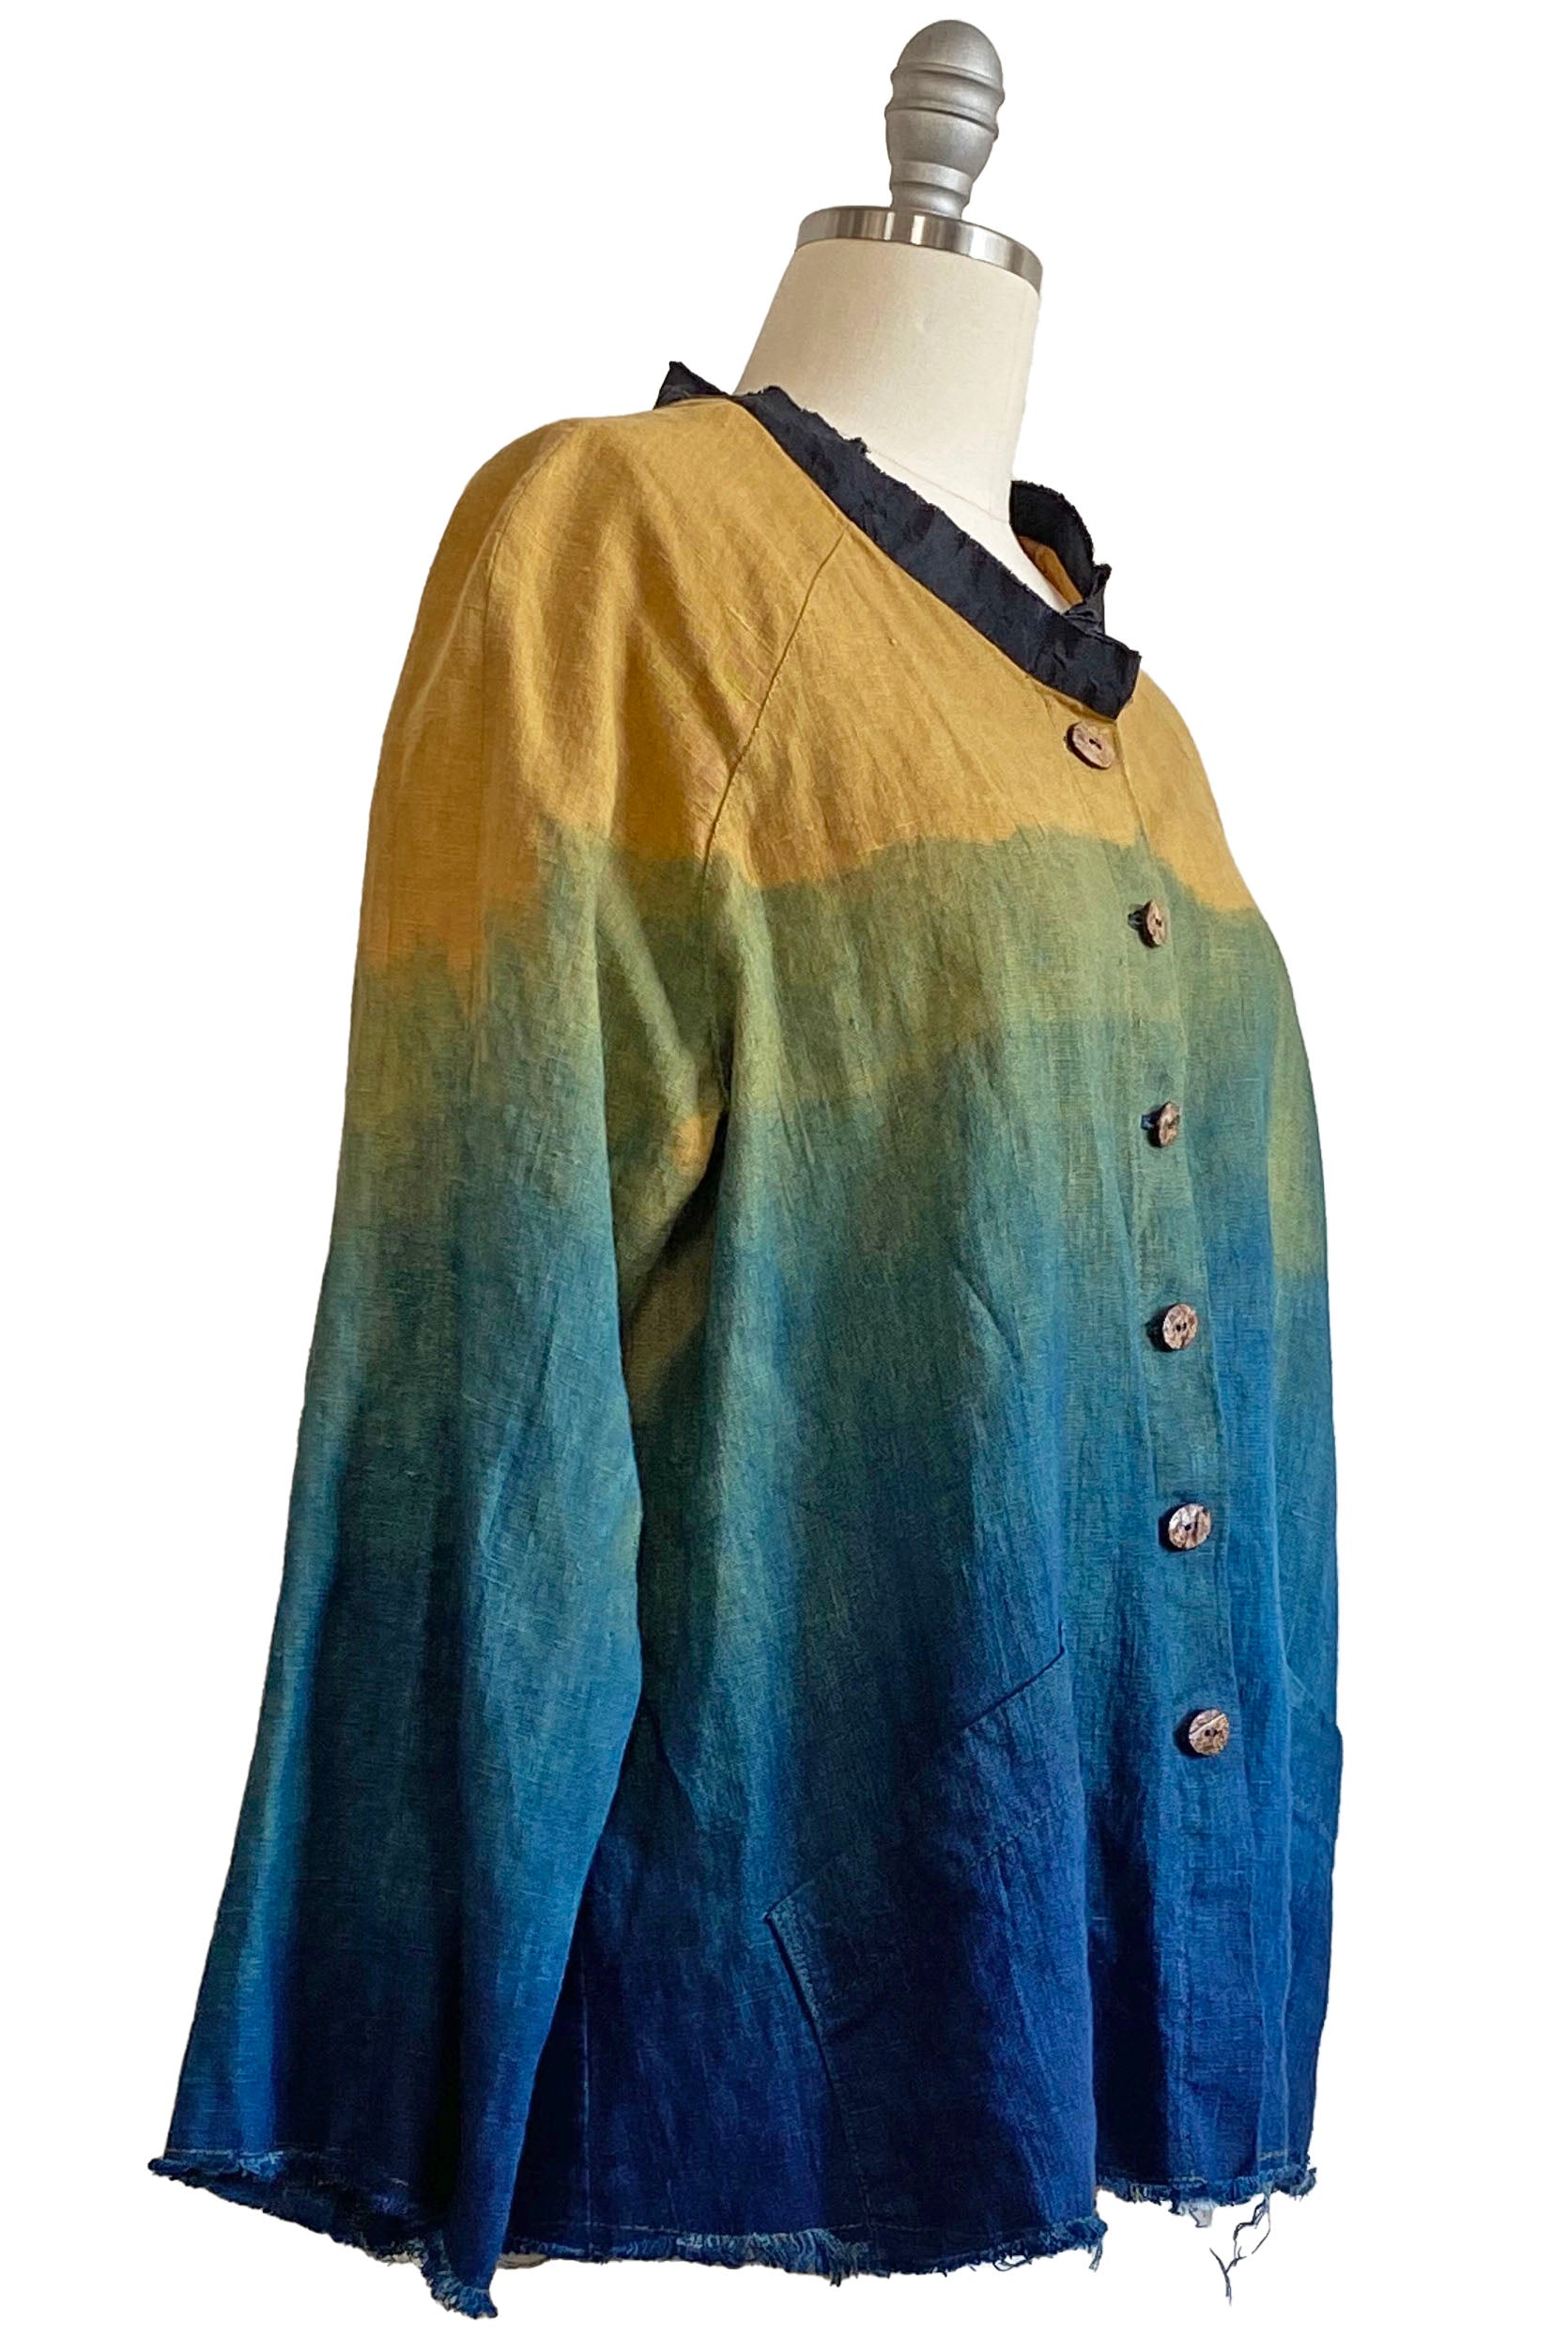 Ariel Jacket w/ Indigo Dye - Gold & Indigo - Medium